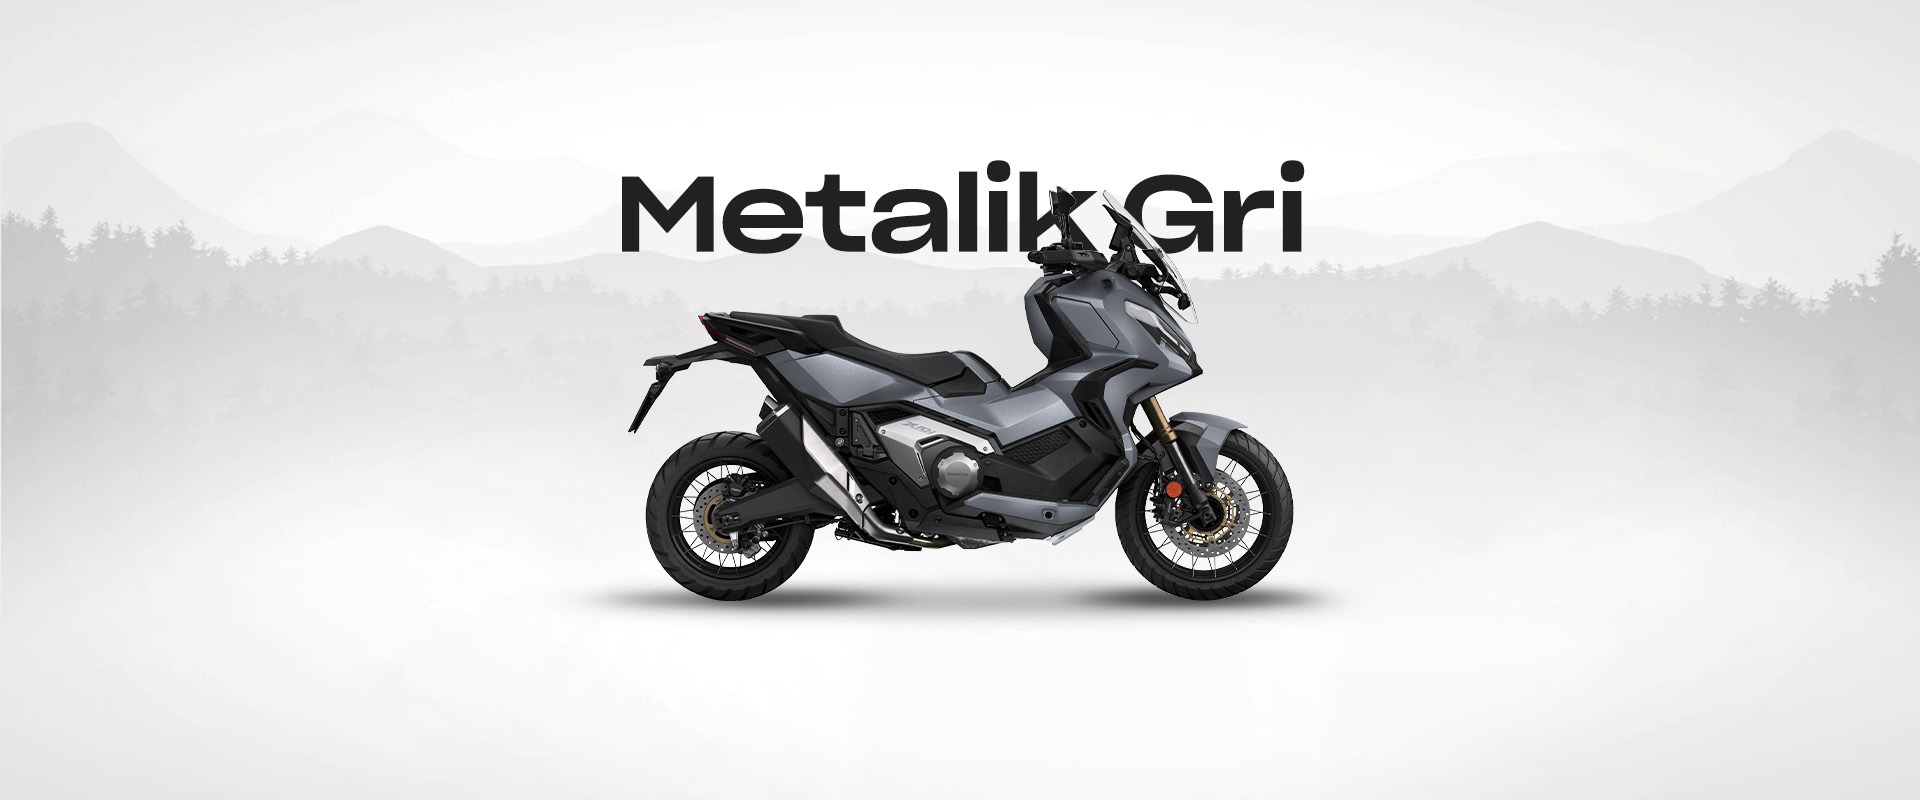  Honda Aysan Metalik Gri <br /> Mat Iridium Gray Metallic <br /> (NHC64)